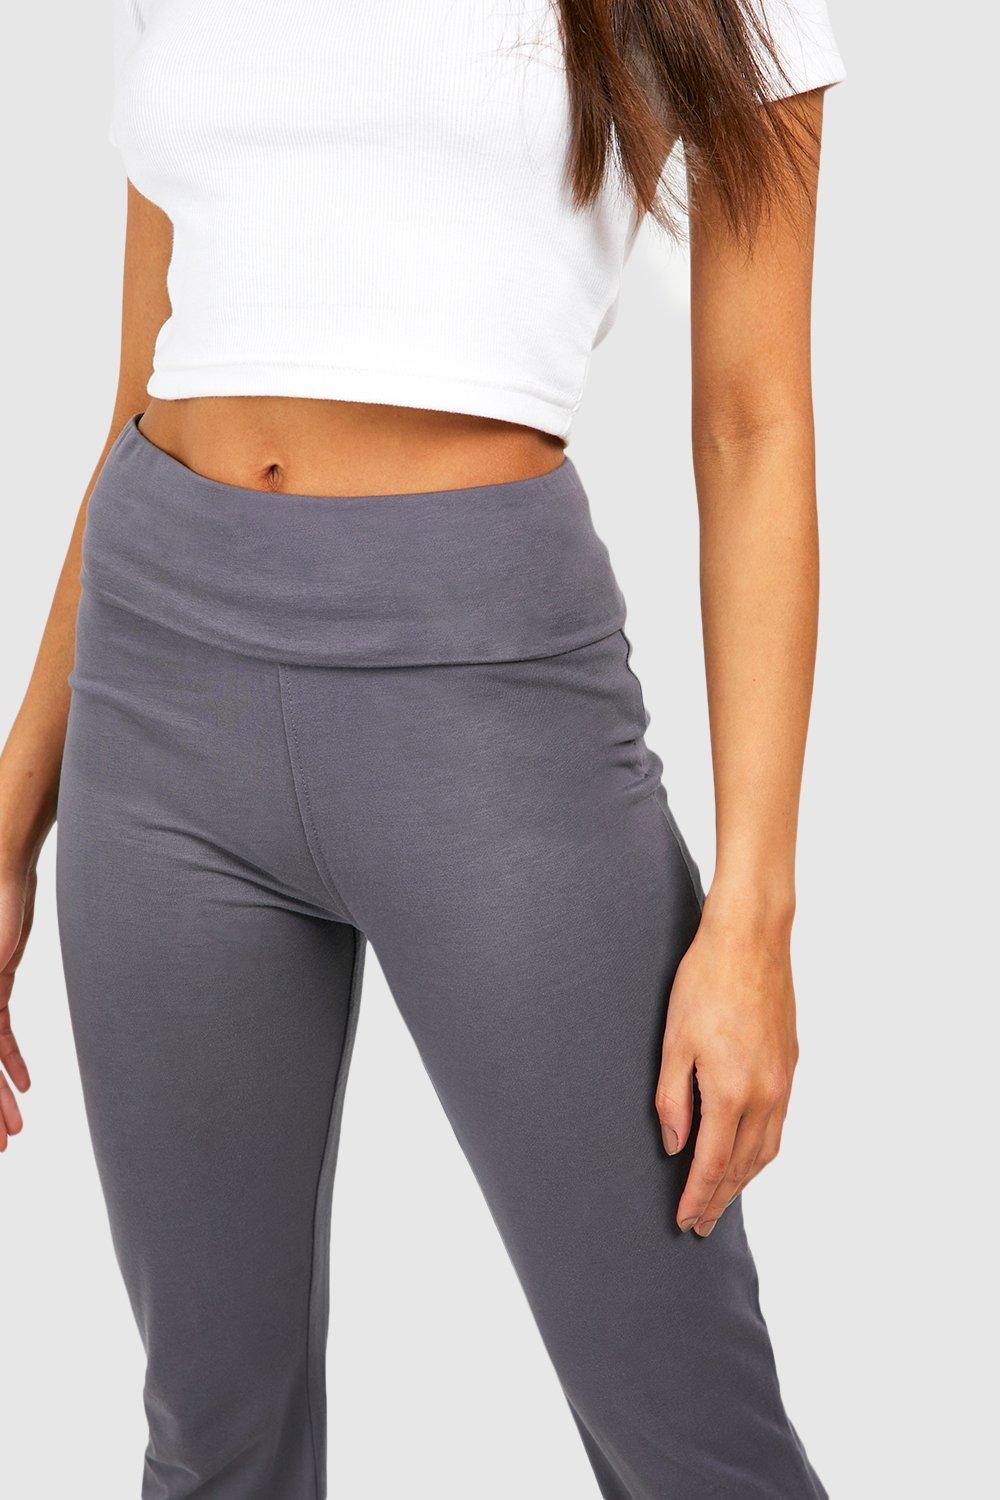 Womens Cotton Yoga Pants with Fold Waist Women Leggings Fitness